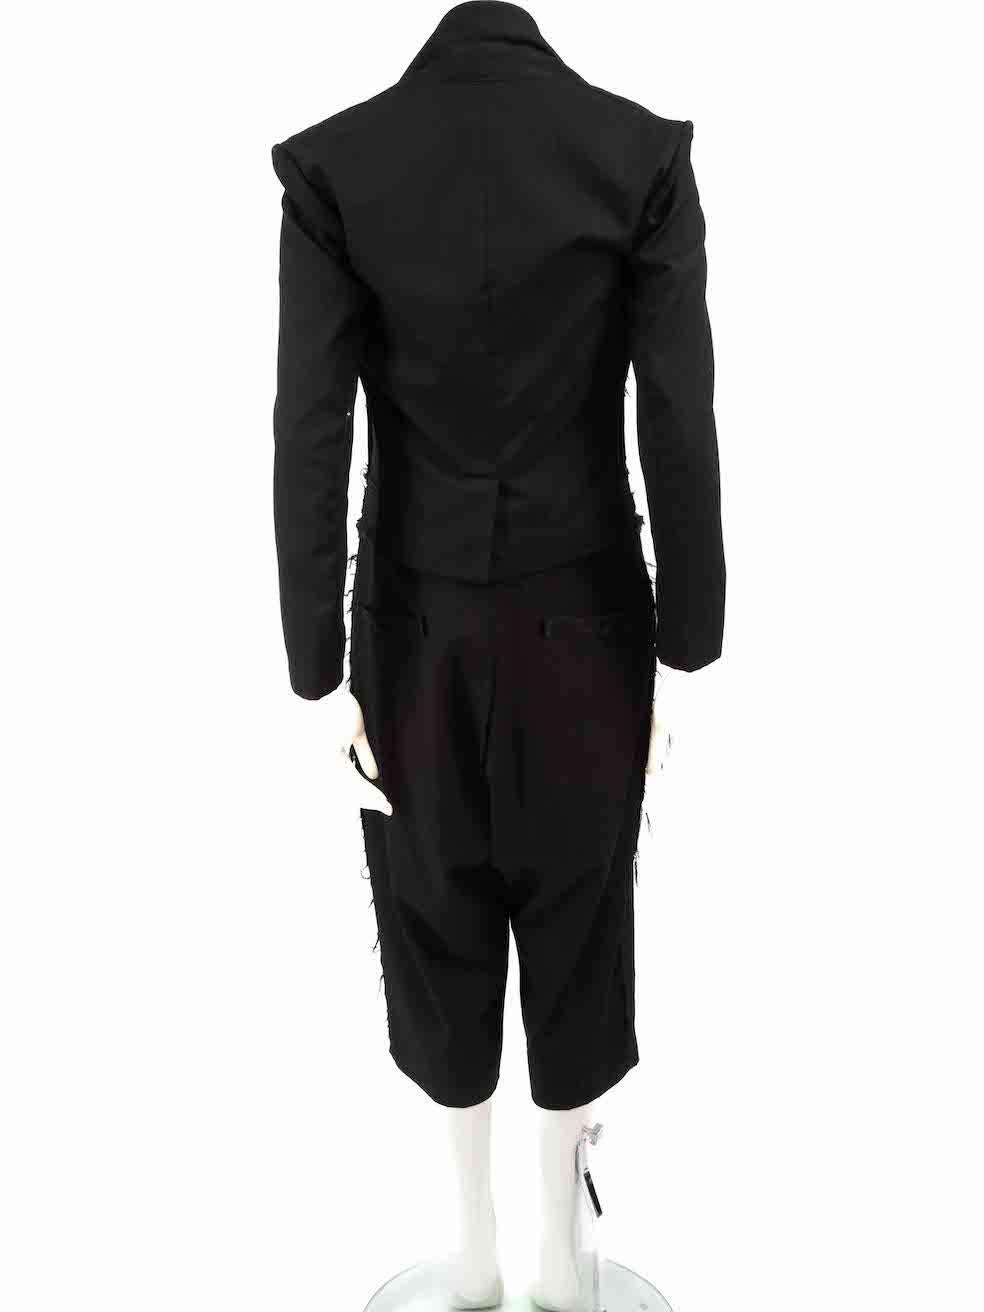 Yohji Yamamoto Black Wool Raw Edge Jumpsuit Set Size XS In Good Condition For Sale In London, GB